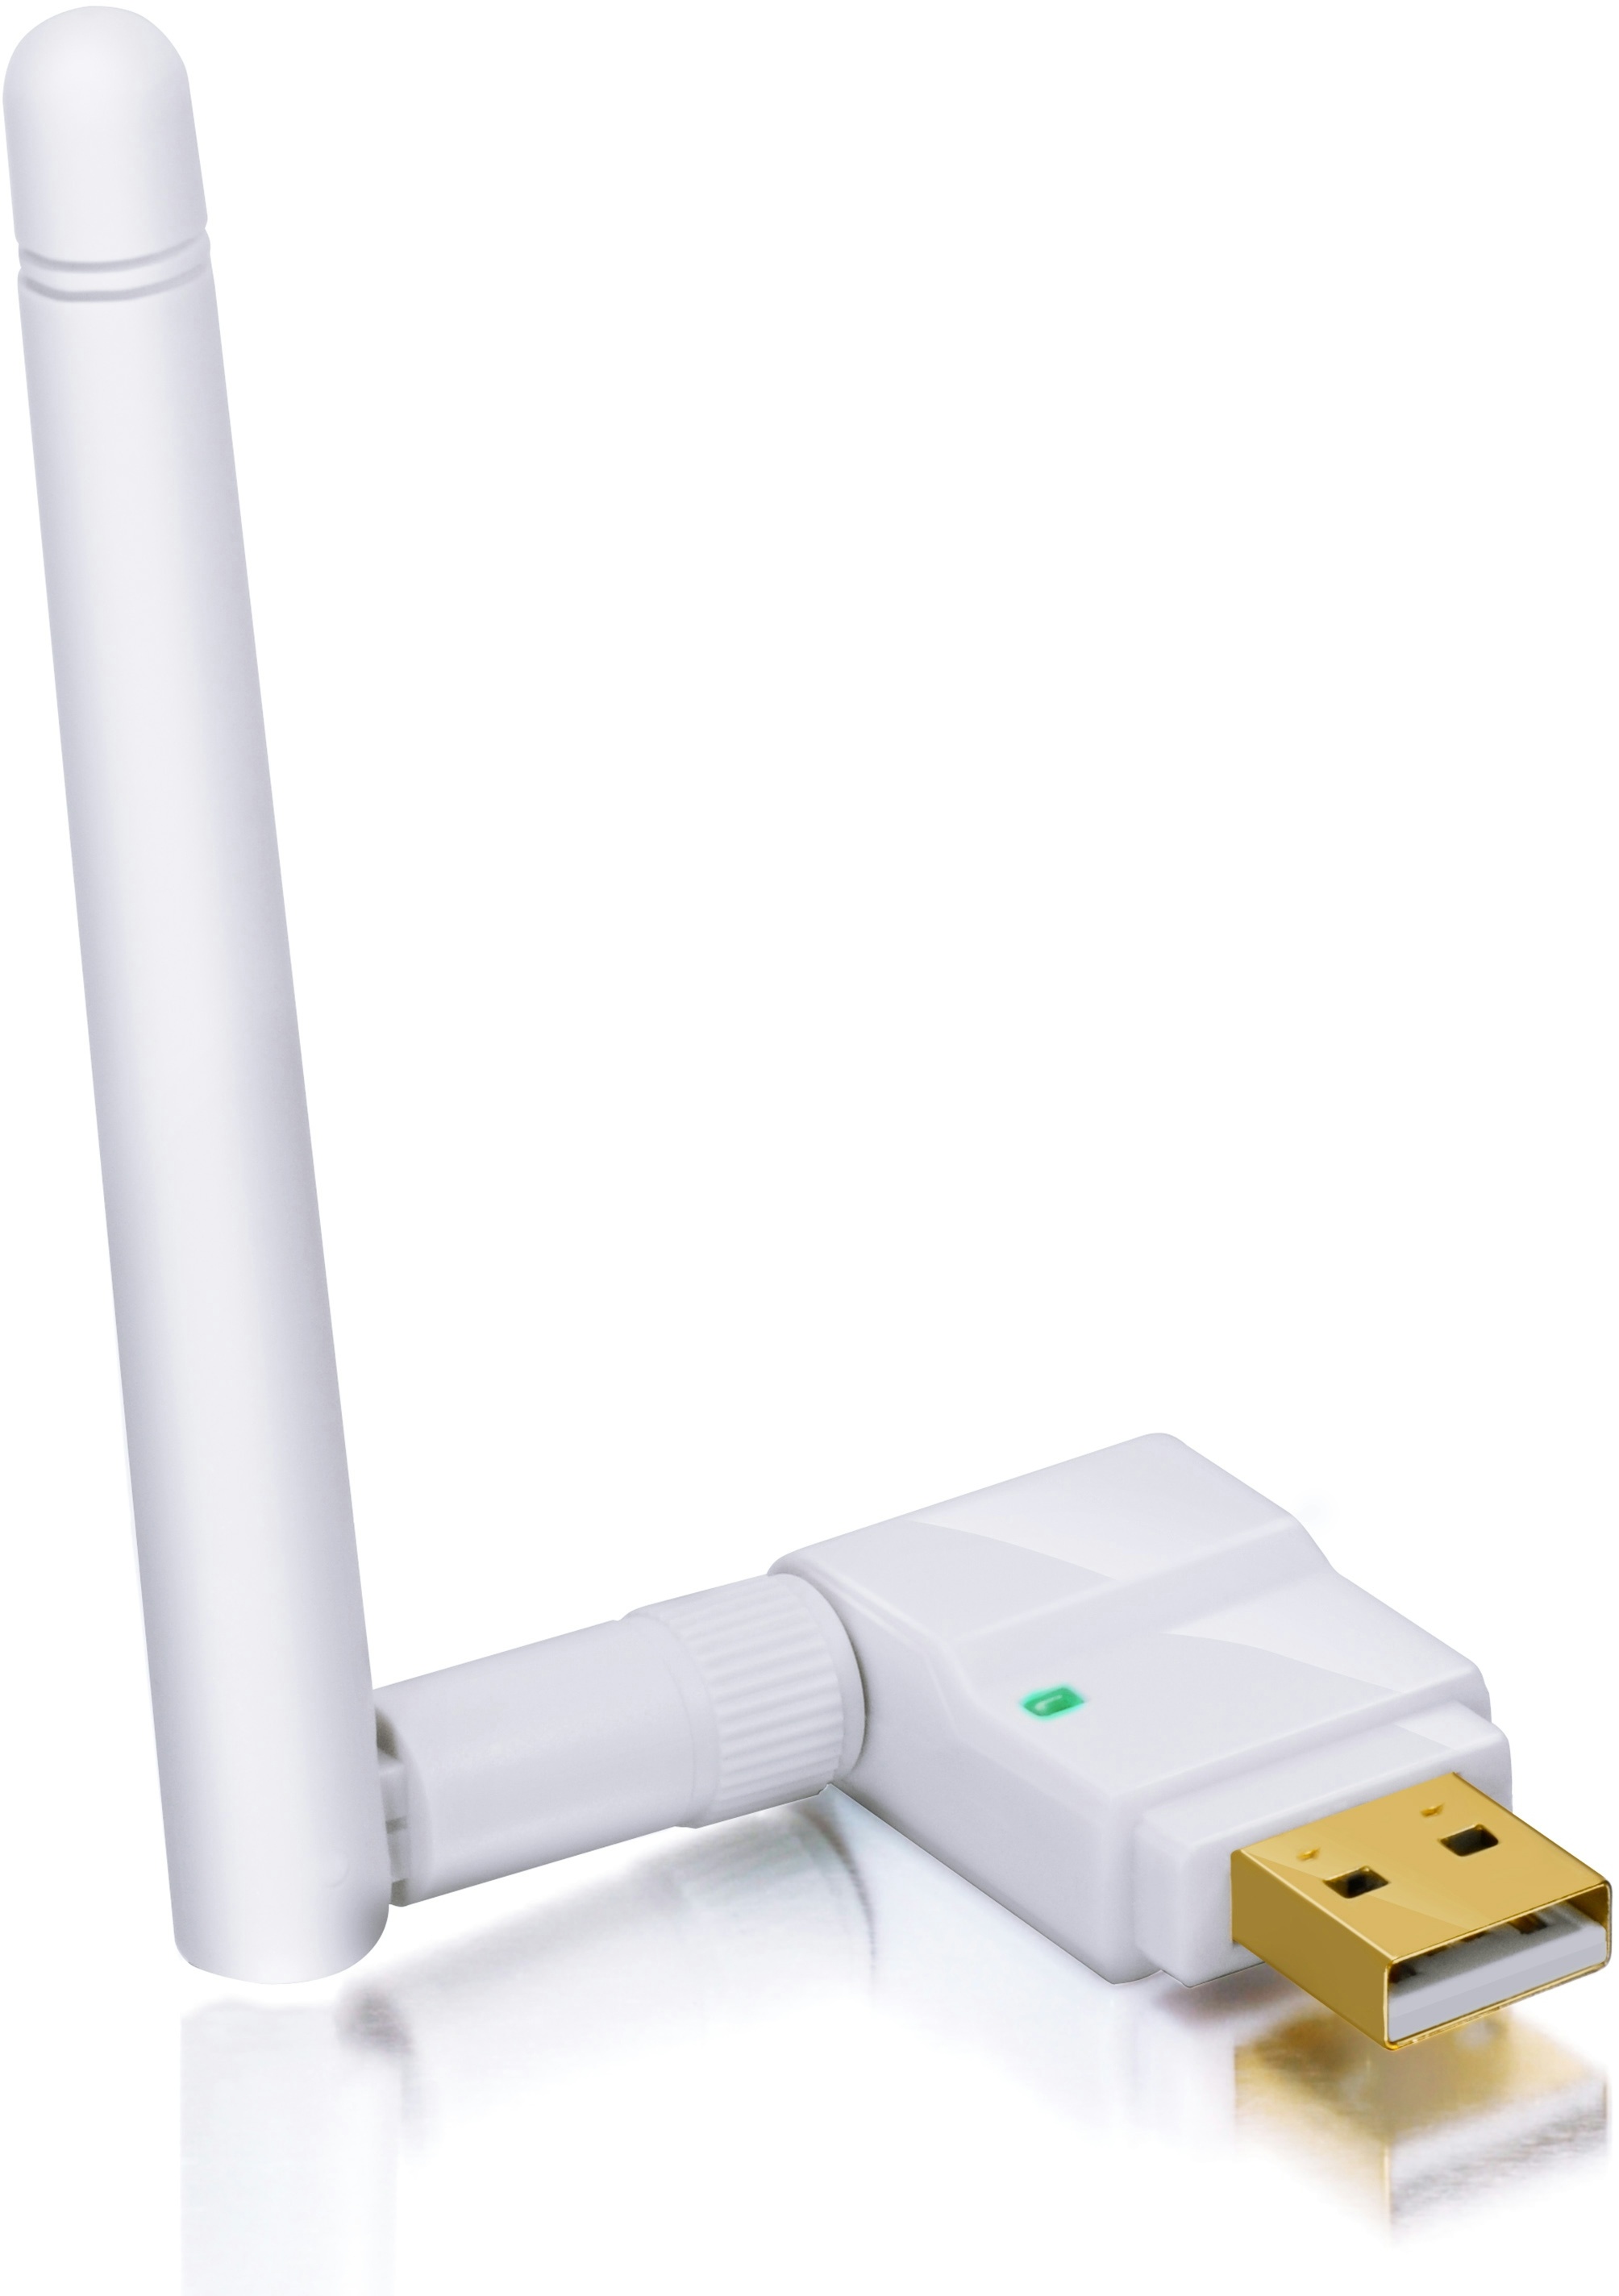 CSL - WLAN-Dongle, WLAN Stick, 300 Mbit/s, mit abnehmbarer Antenne, USB 2.0 Stick